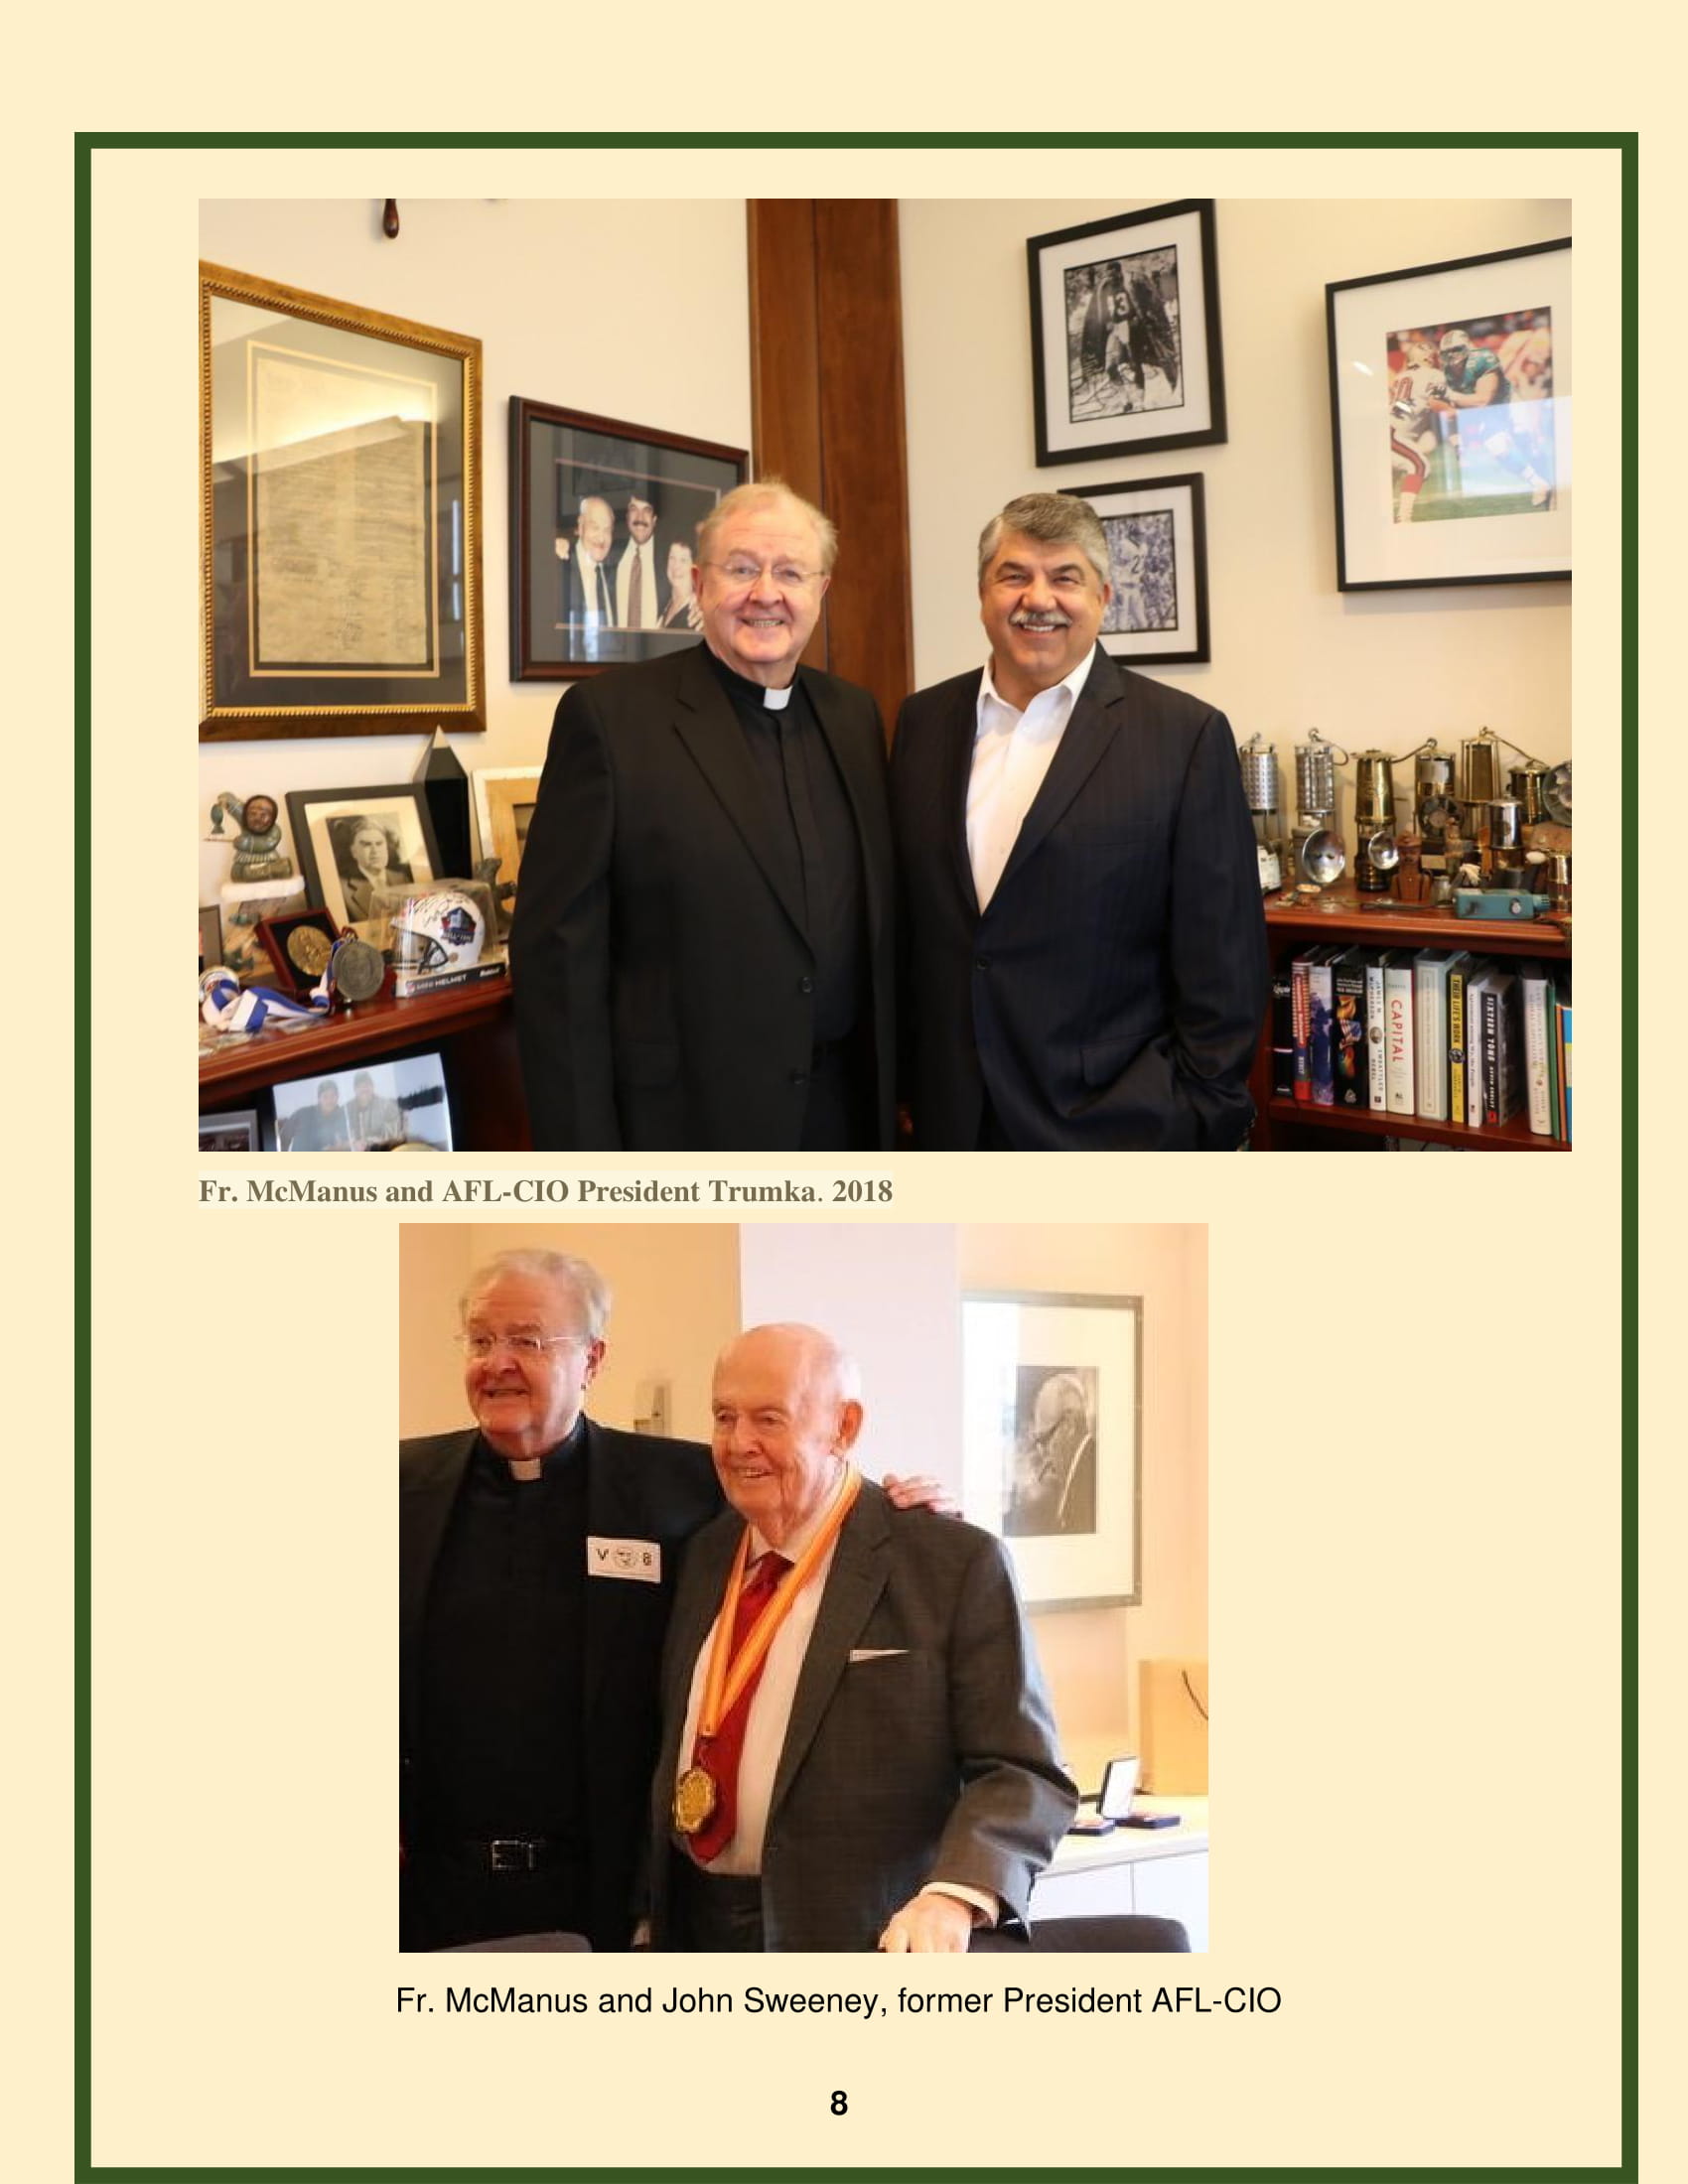 Fr. McManus and AFL-CIO President Trumka and Fr. McManus and John Sweeney